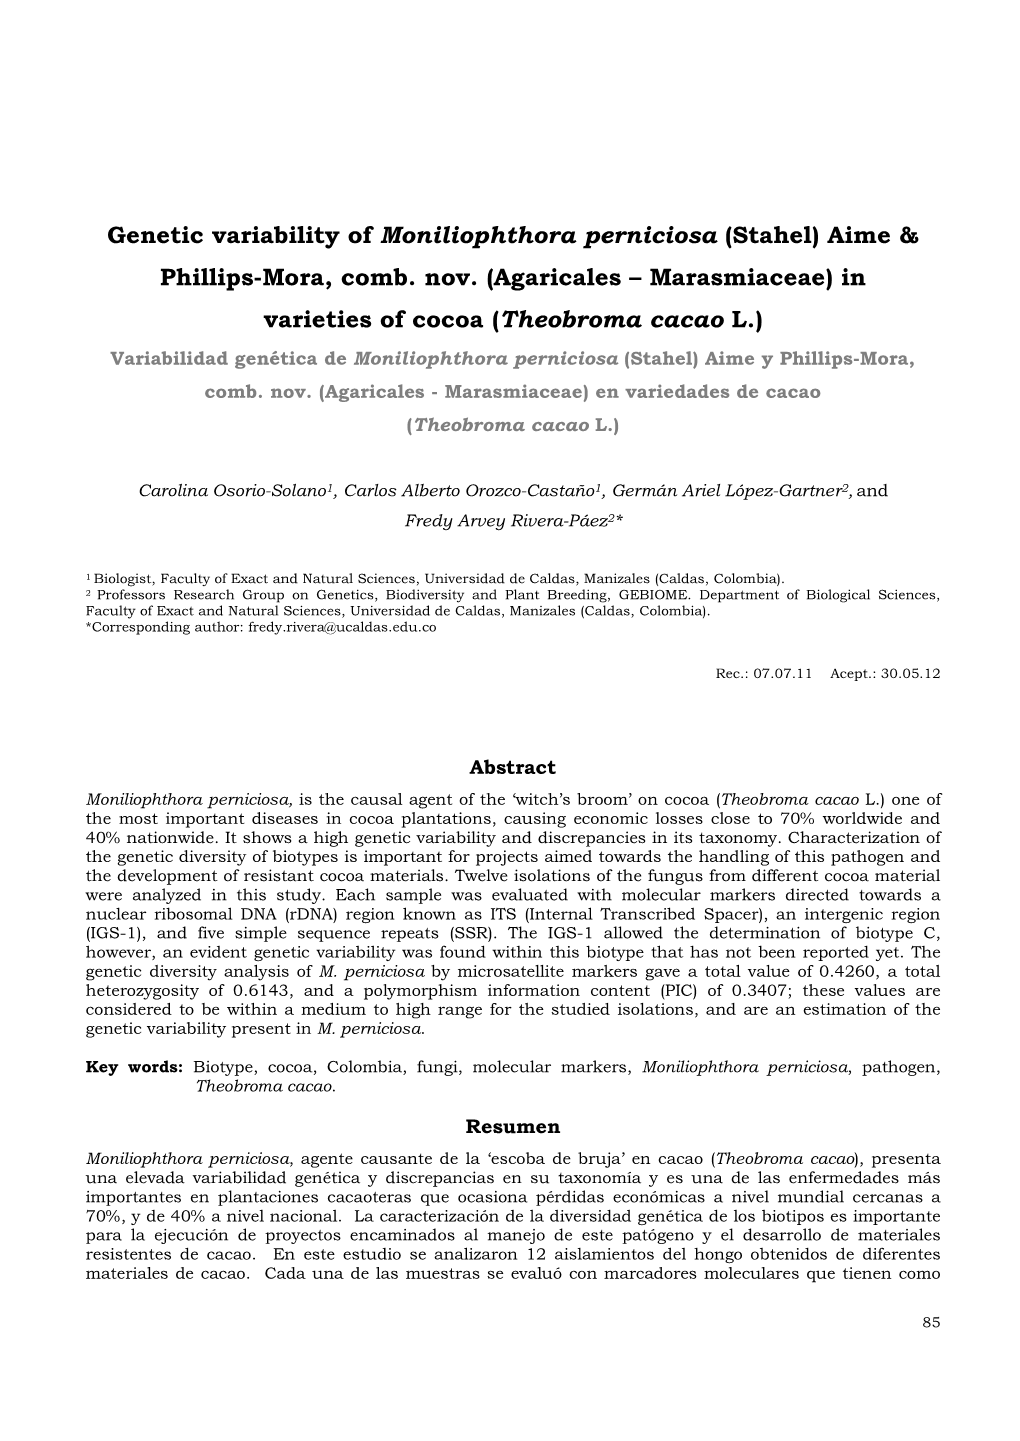 Genetic Variability of Moniliophthora Perniciosa (Stahel) Aime & Phillips-Mora, Comb